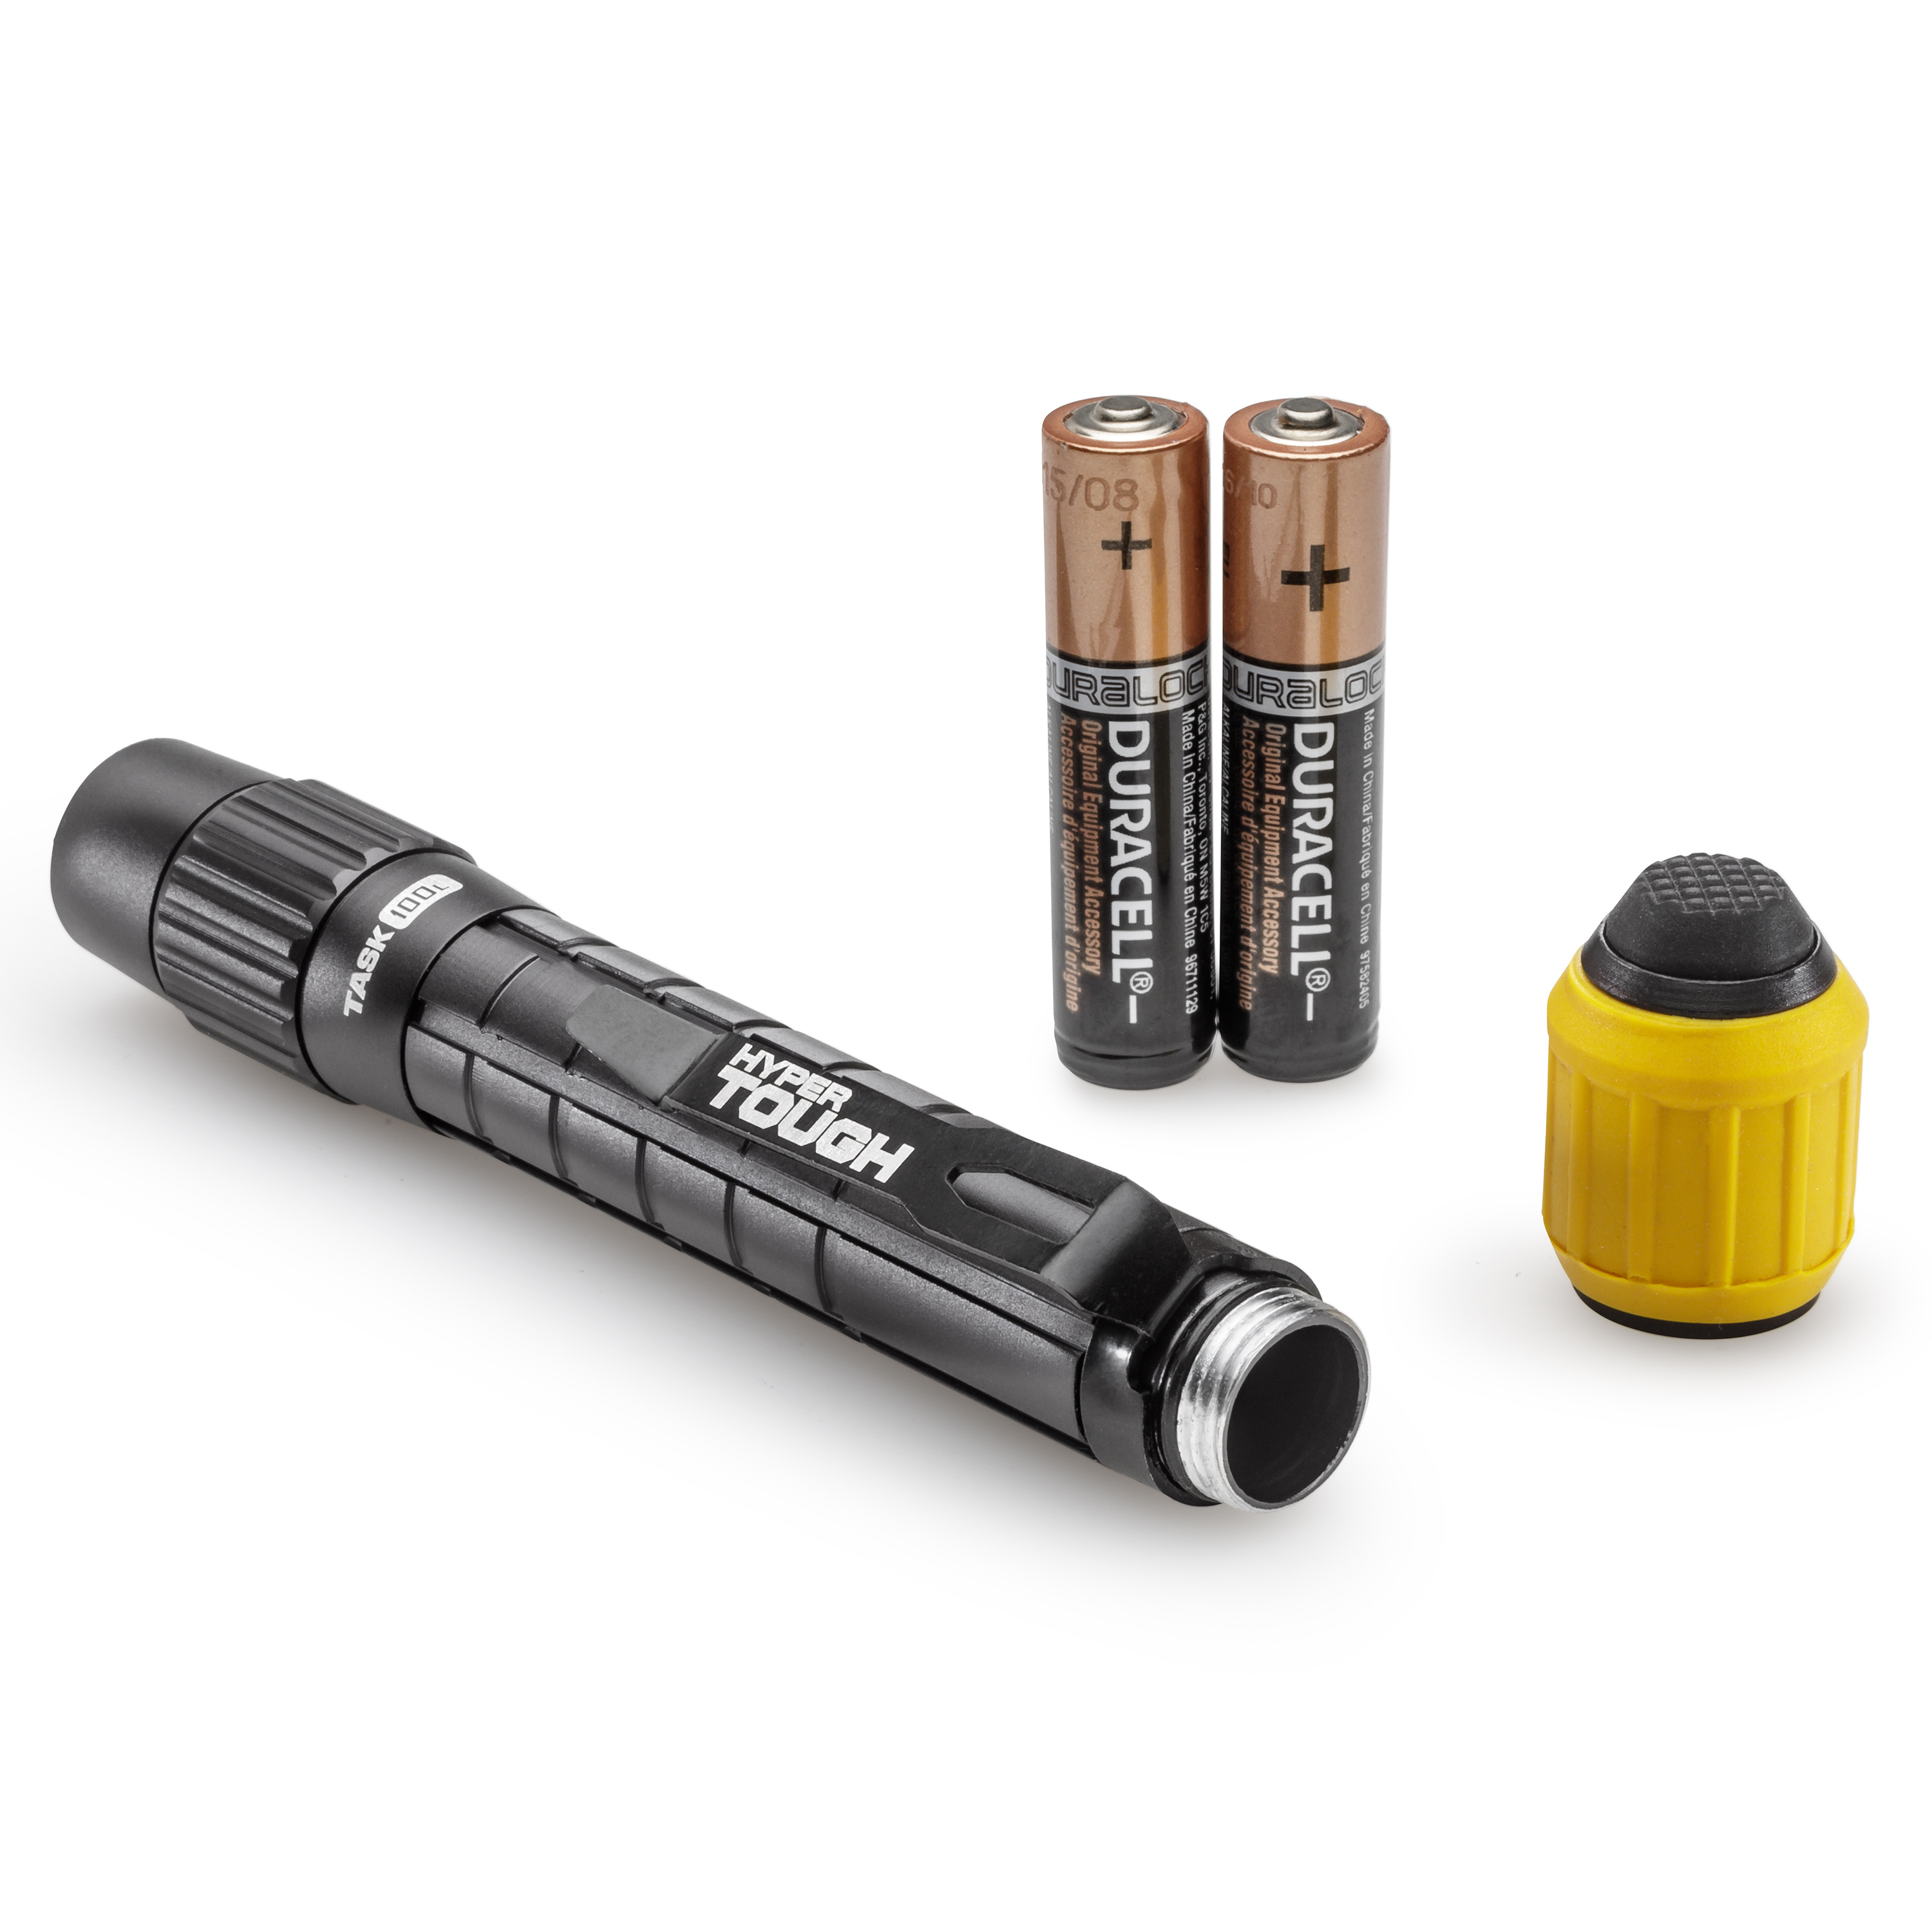 Hyper Tough 100 Lumen Pen Light Batteries Included